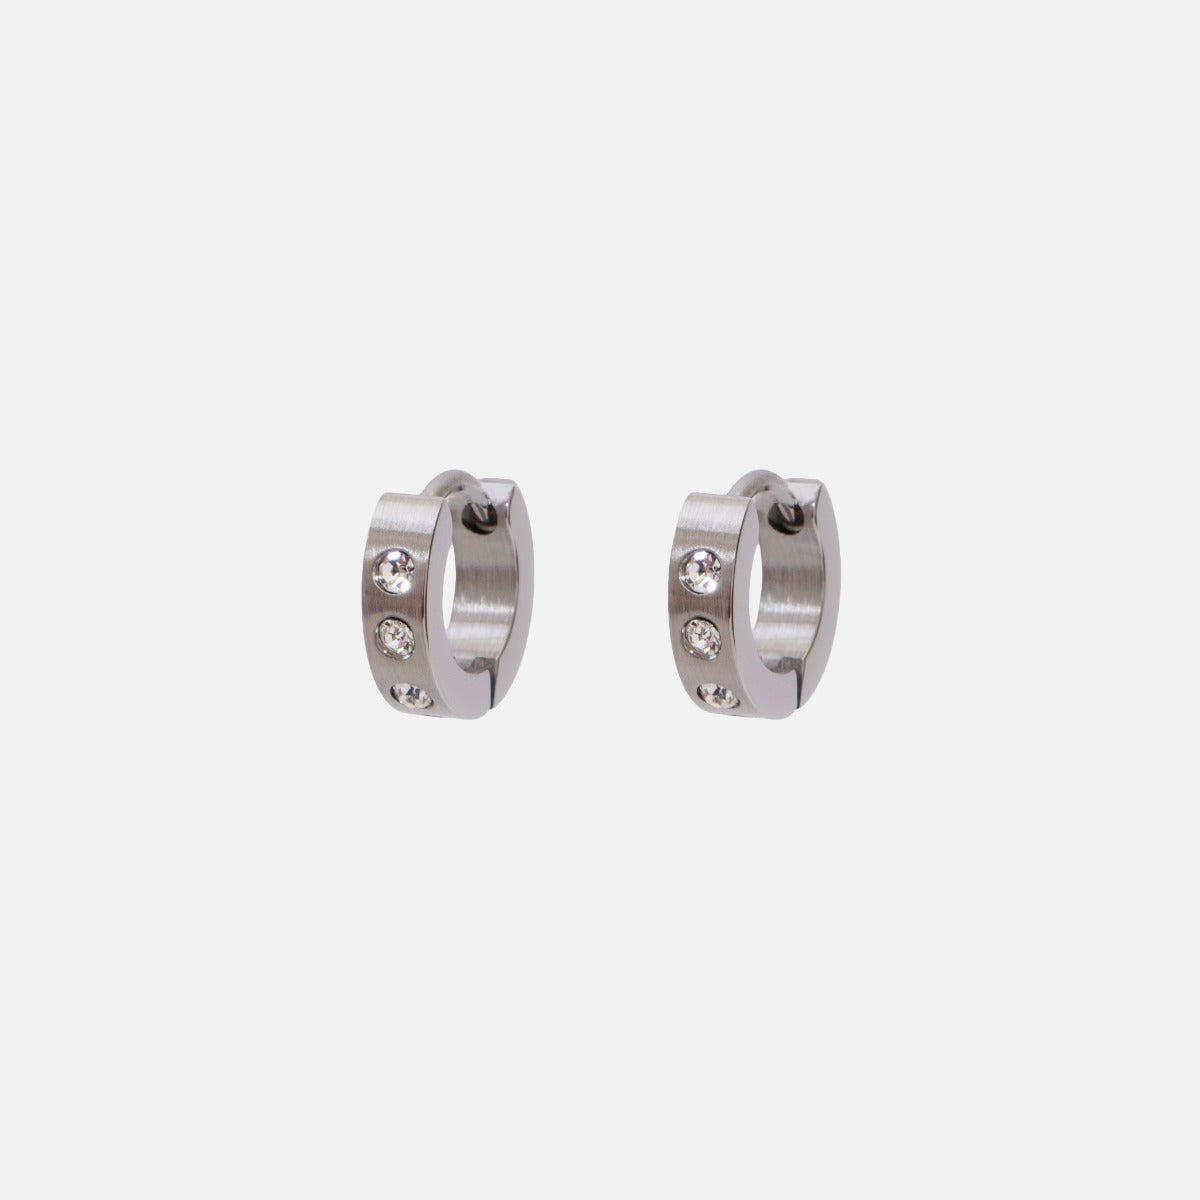 10 mm silvered hoop earrings with cubic zirconia